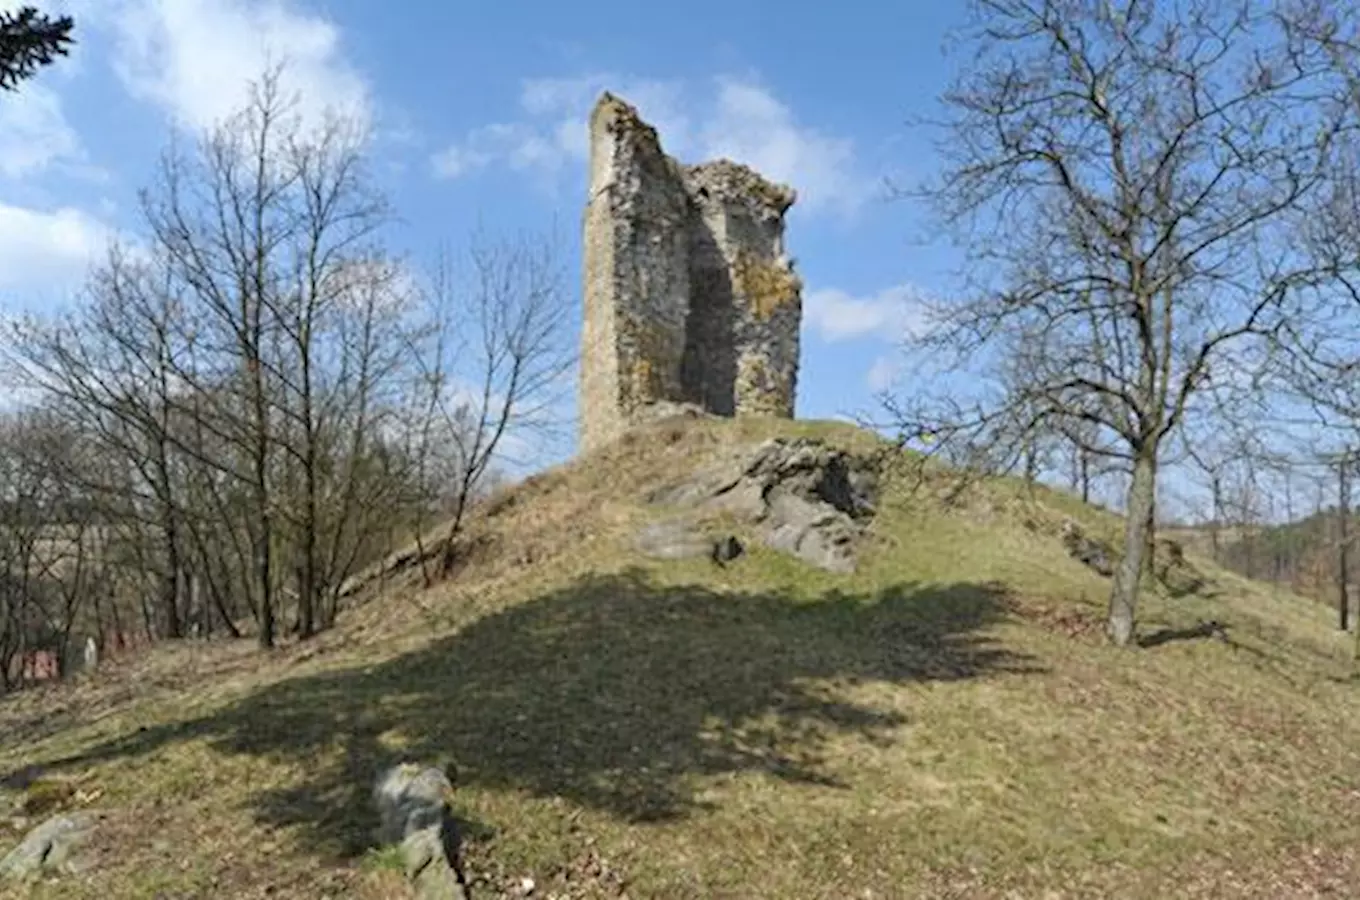 Zřícenina hradu Otaslavice